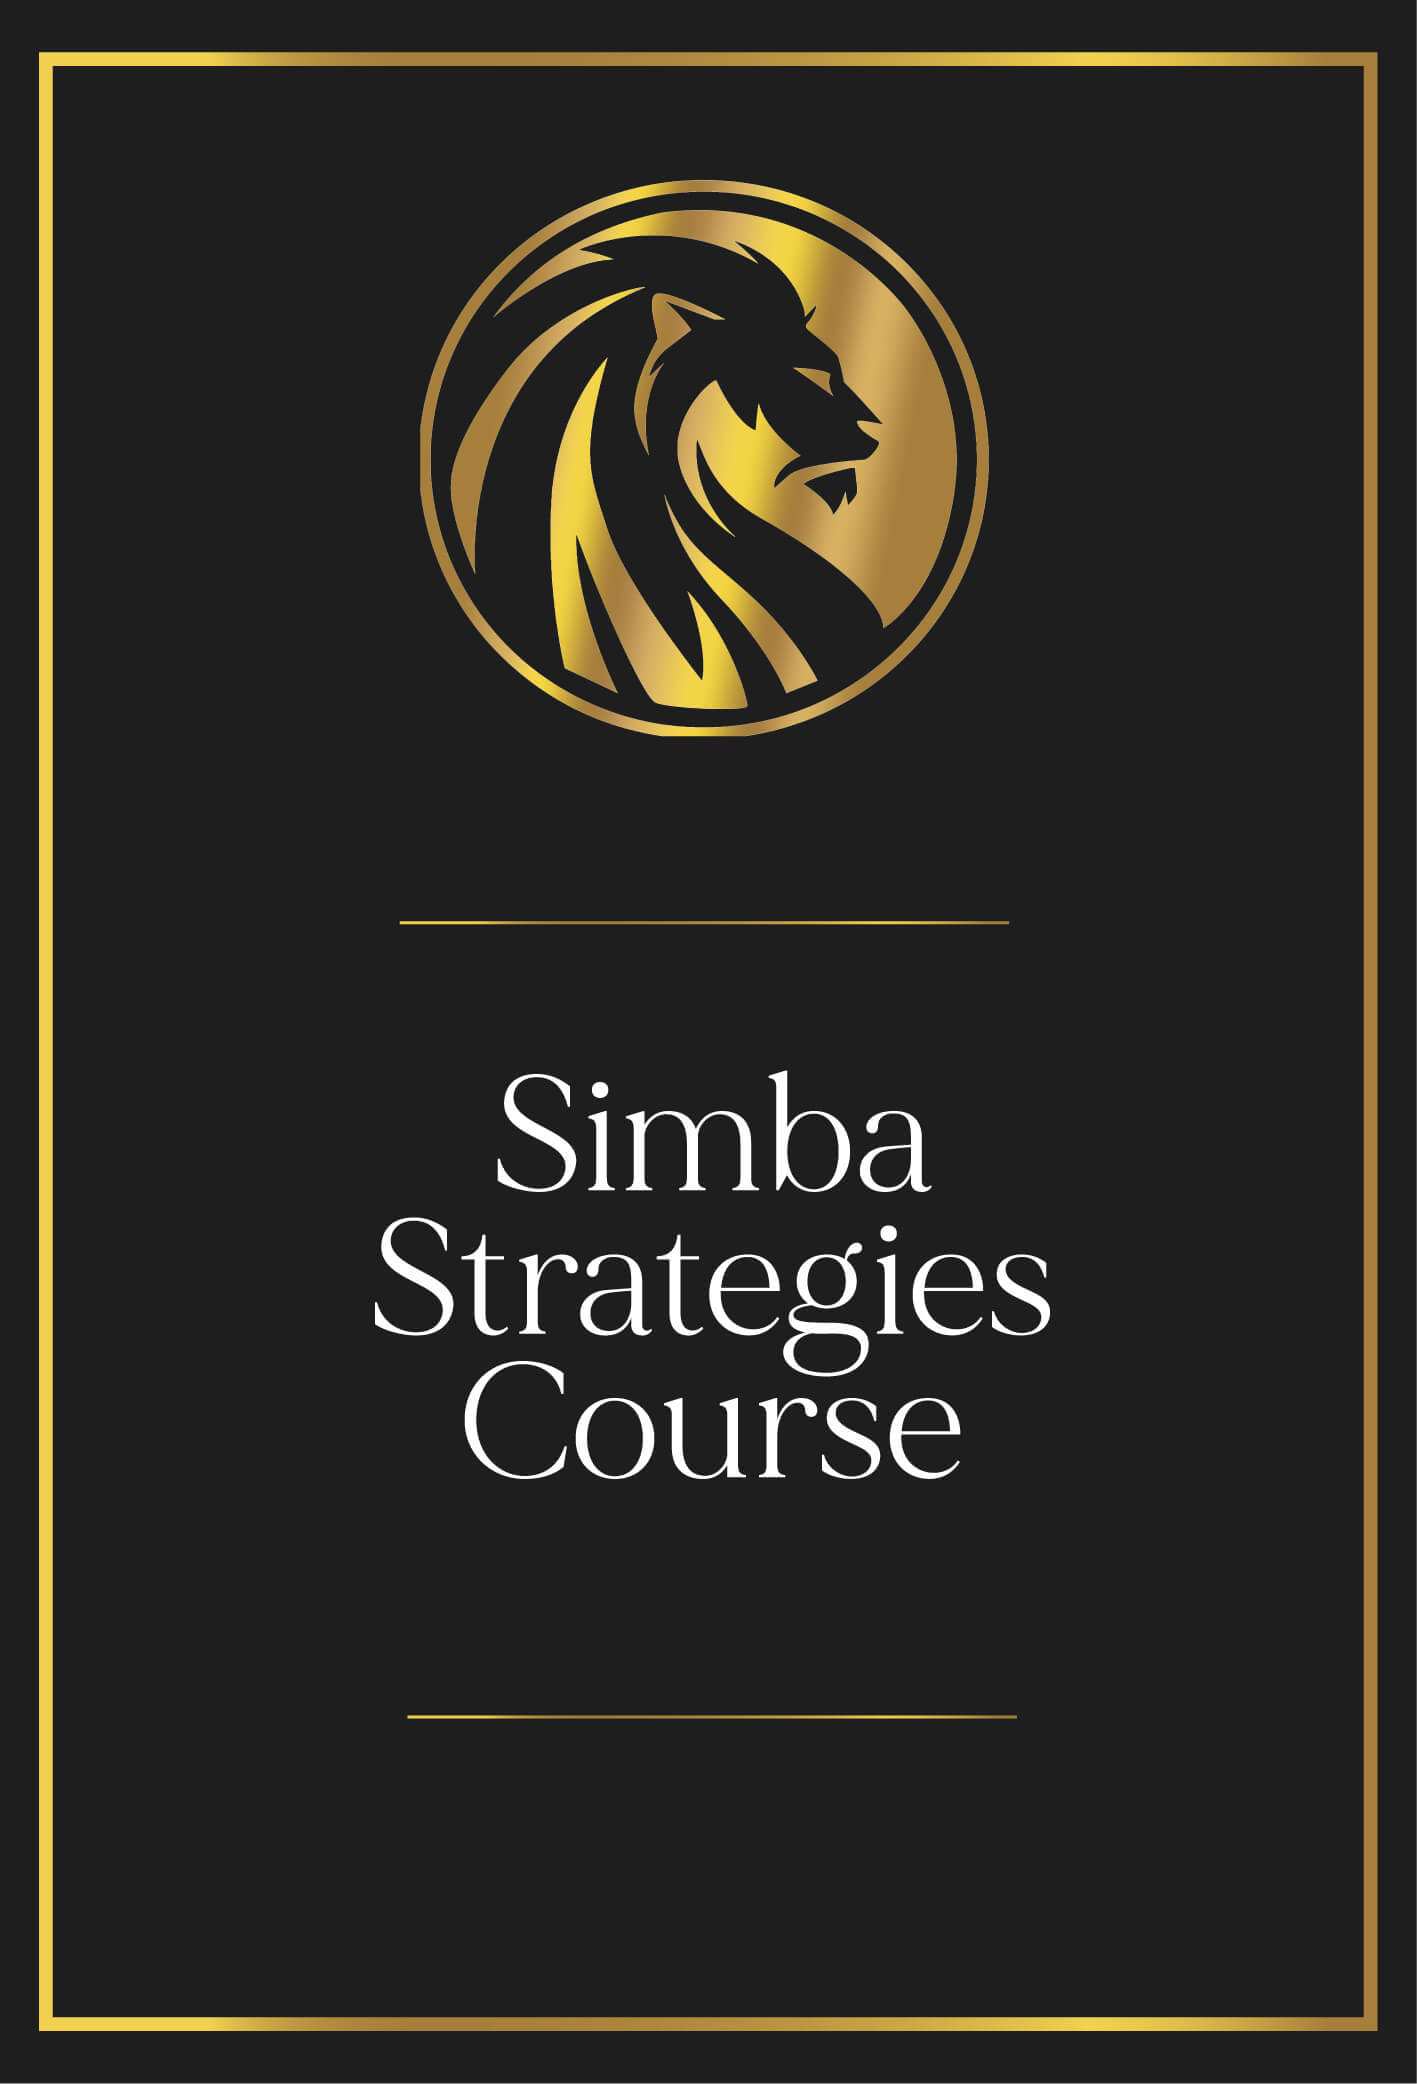 Simba Strategies Course Certification